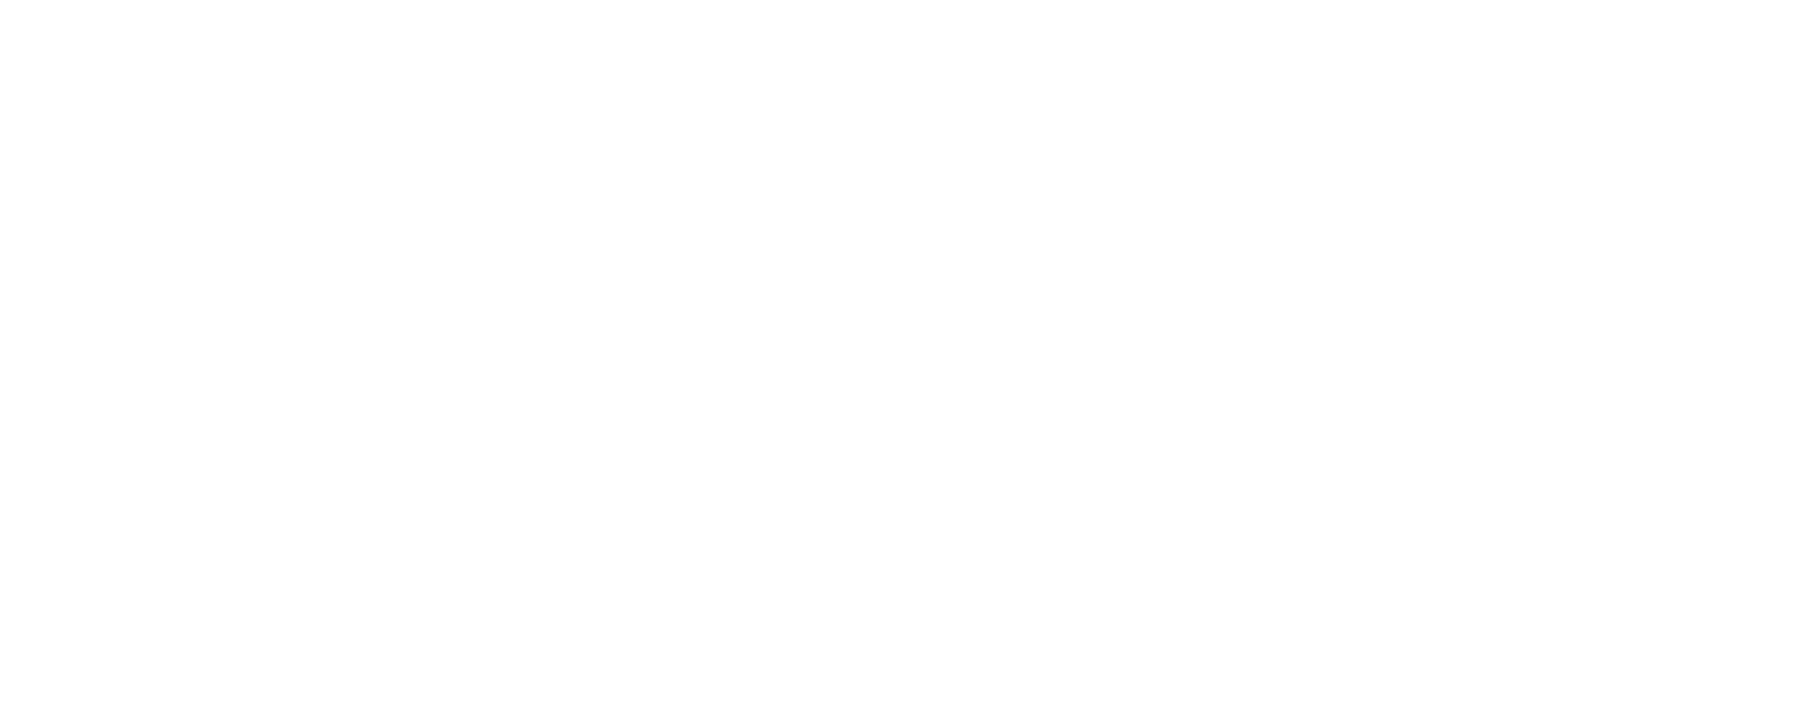 Professio Event Agency logo rgb white